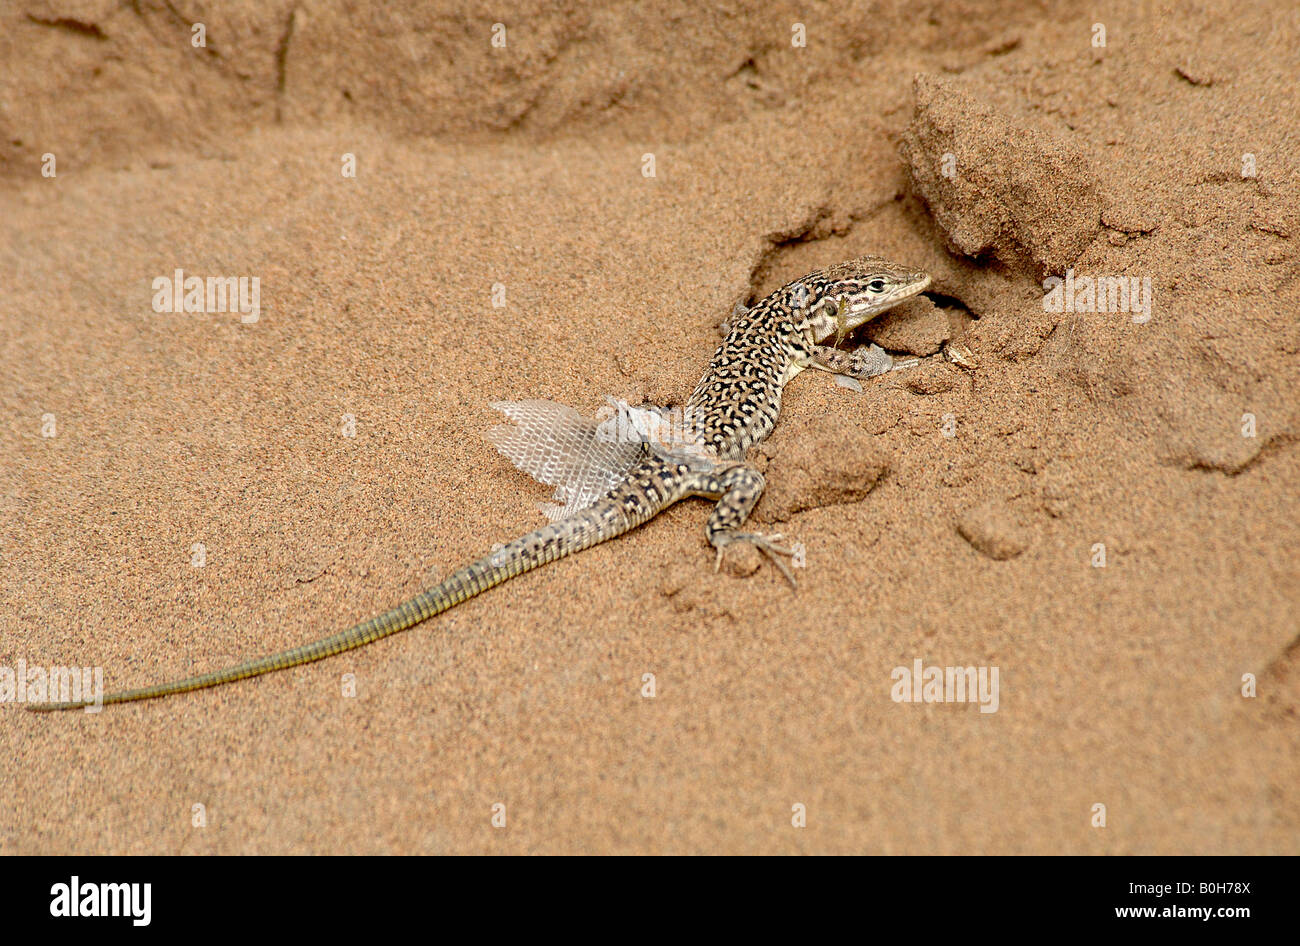 Lizard shedding skin on desert Gansu China Stock Photo